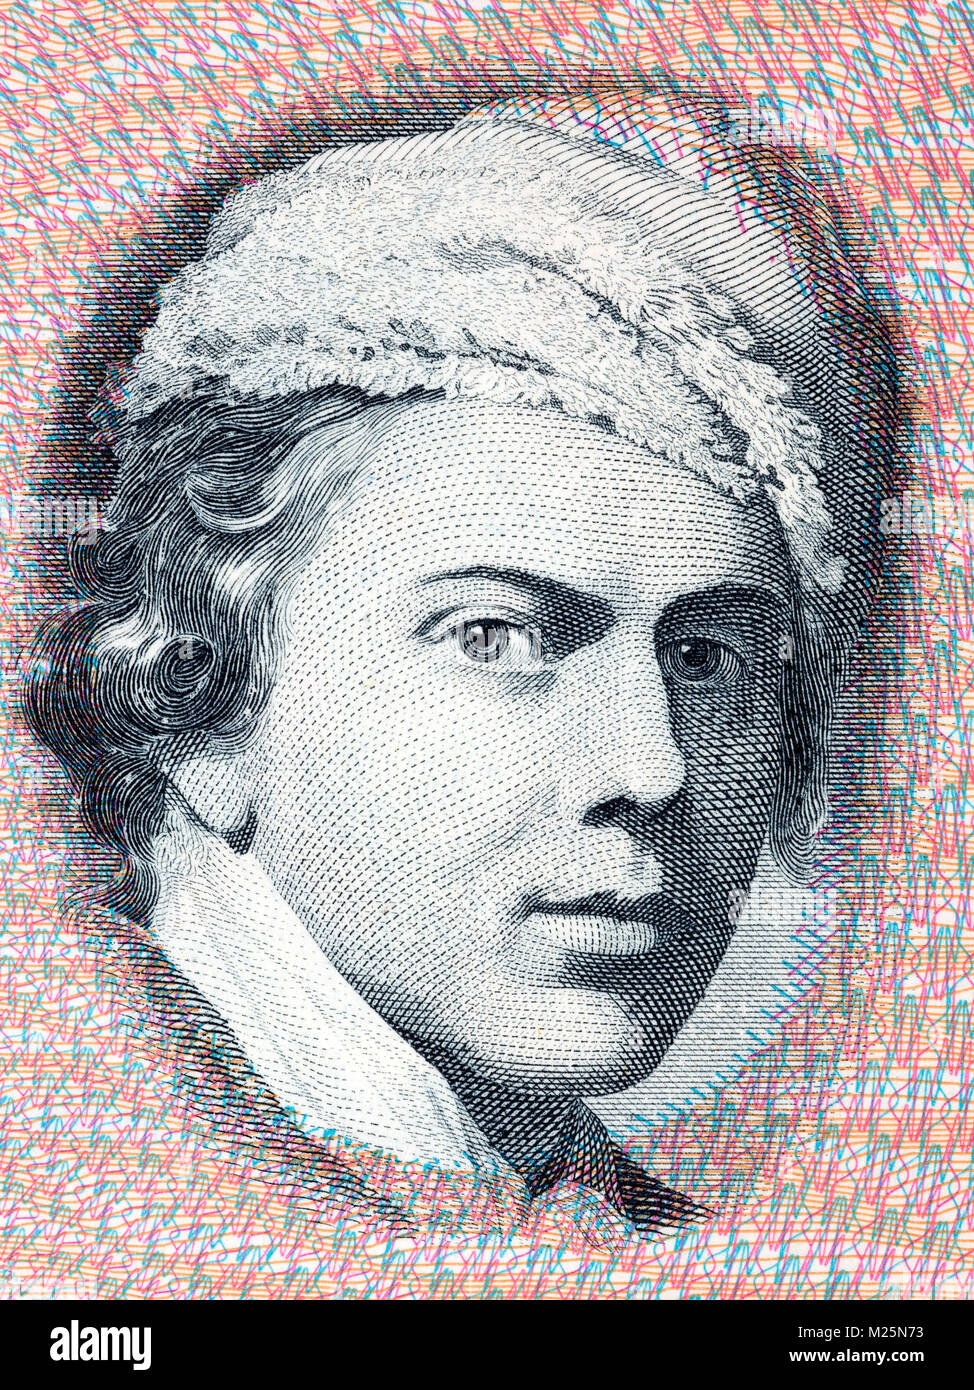 Jens Juel portrait from Danish money Stock Photo